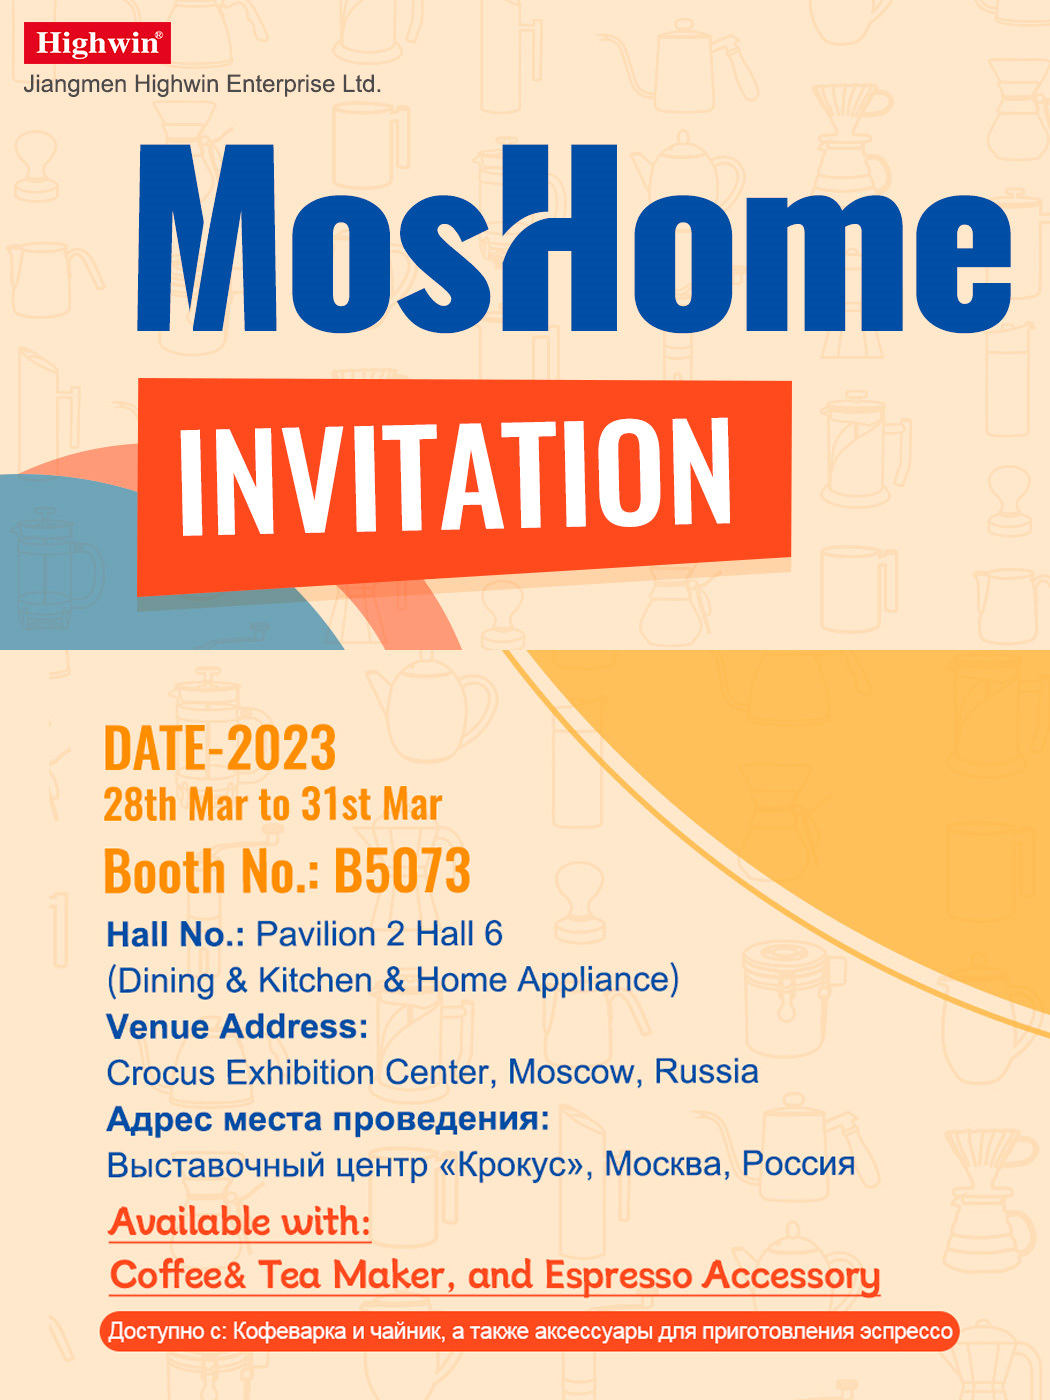 MosHome Invitation